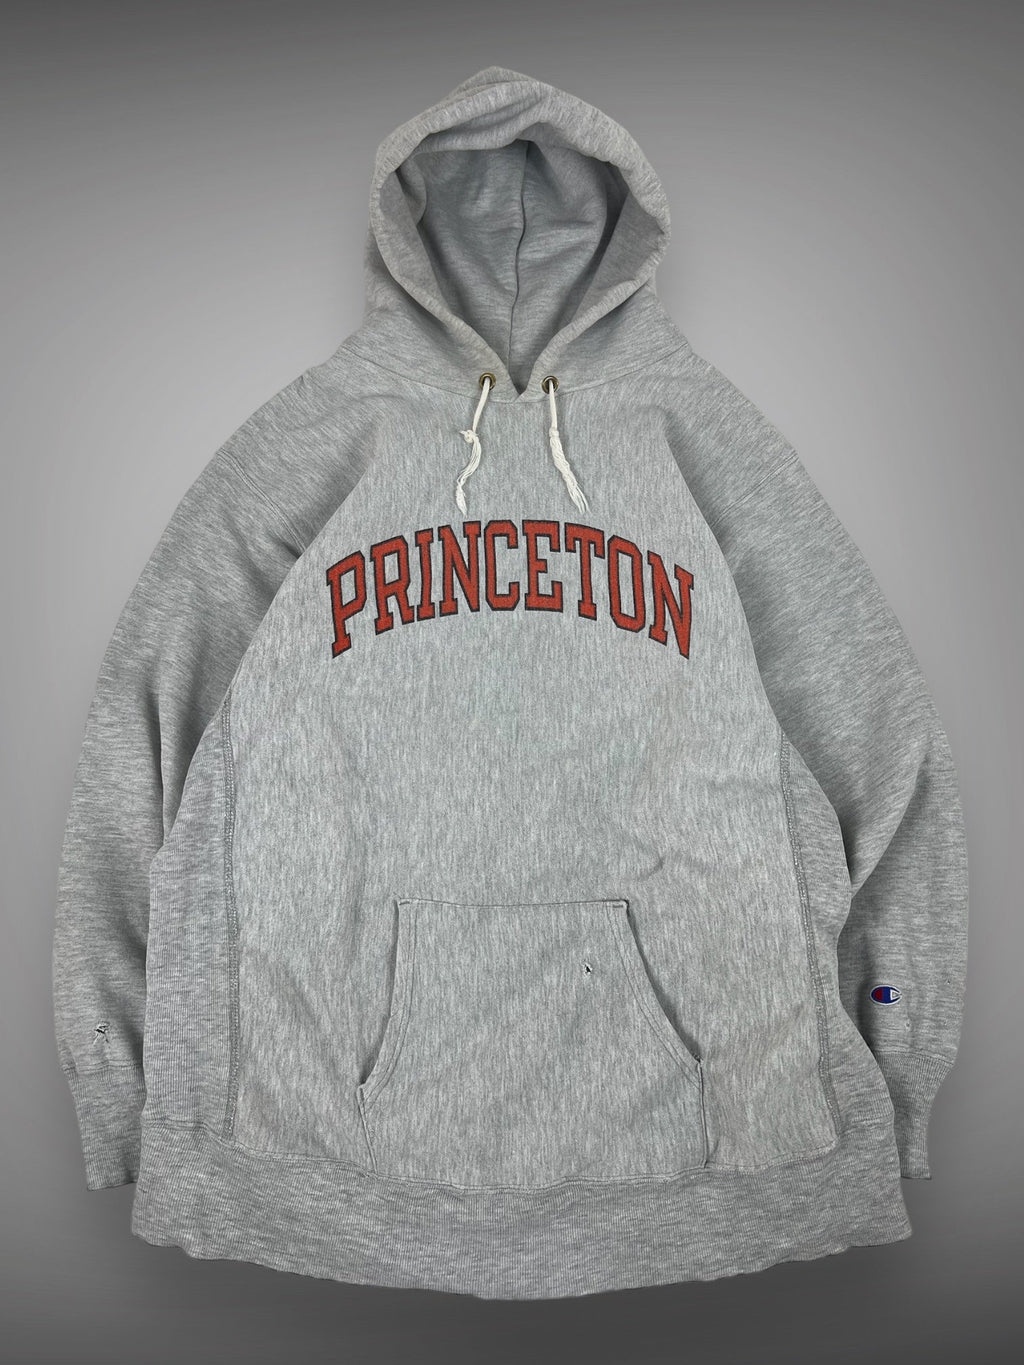 80s Champion Princeton hooded reverse weave sweatshirt fits XL